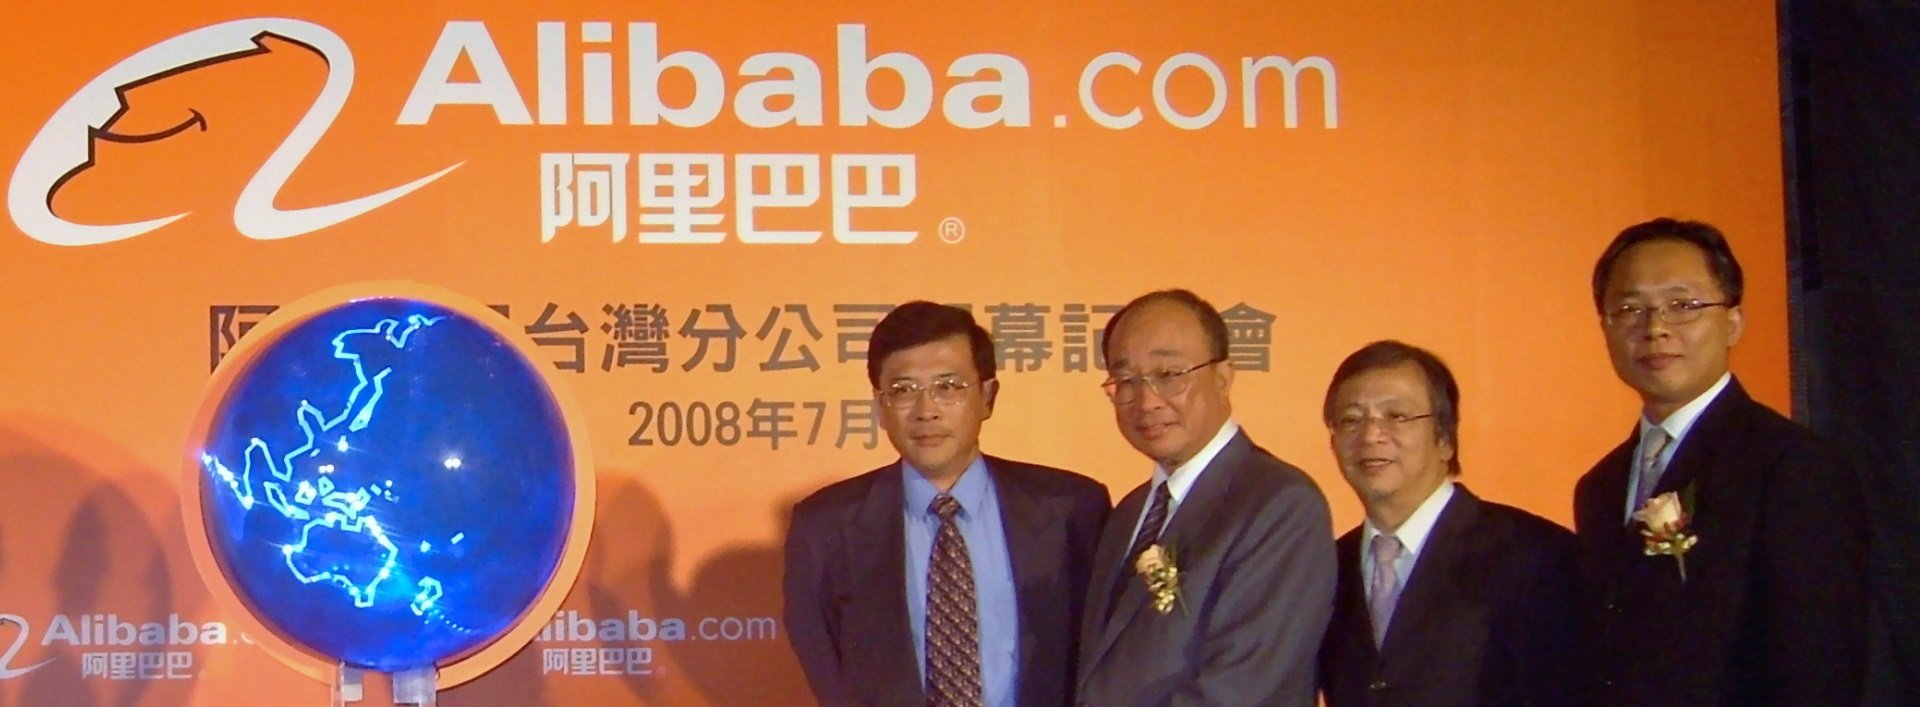 Alibaba en pleno retroceso por el castigo antimonopolio